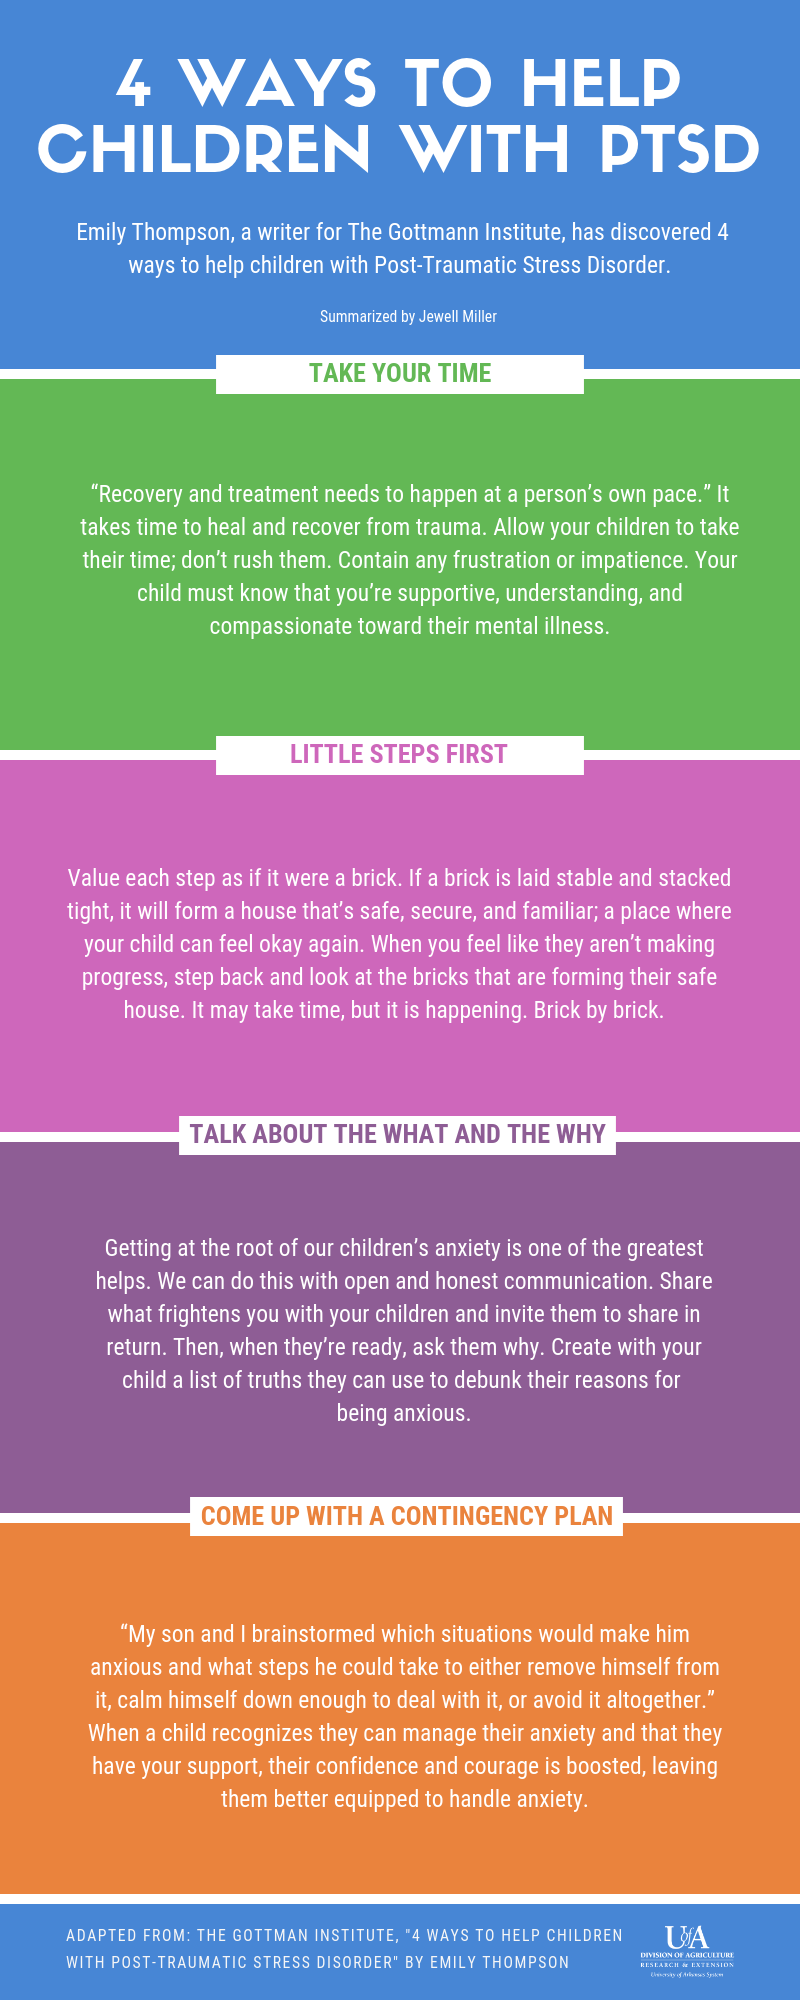 4 Way to Help Children with PTSD